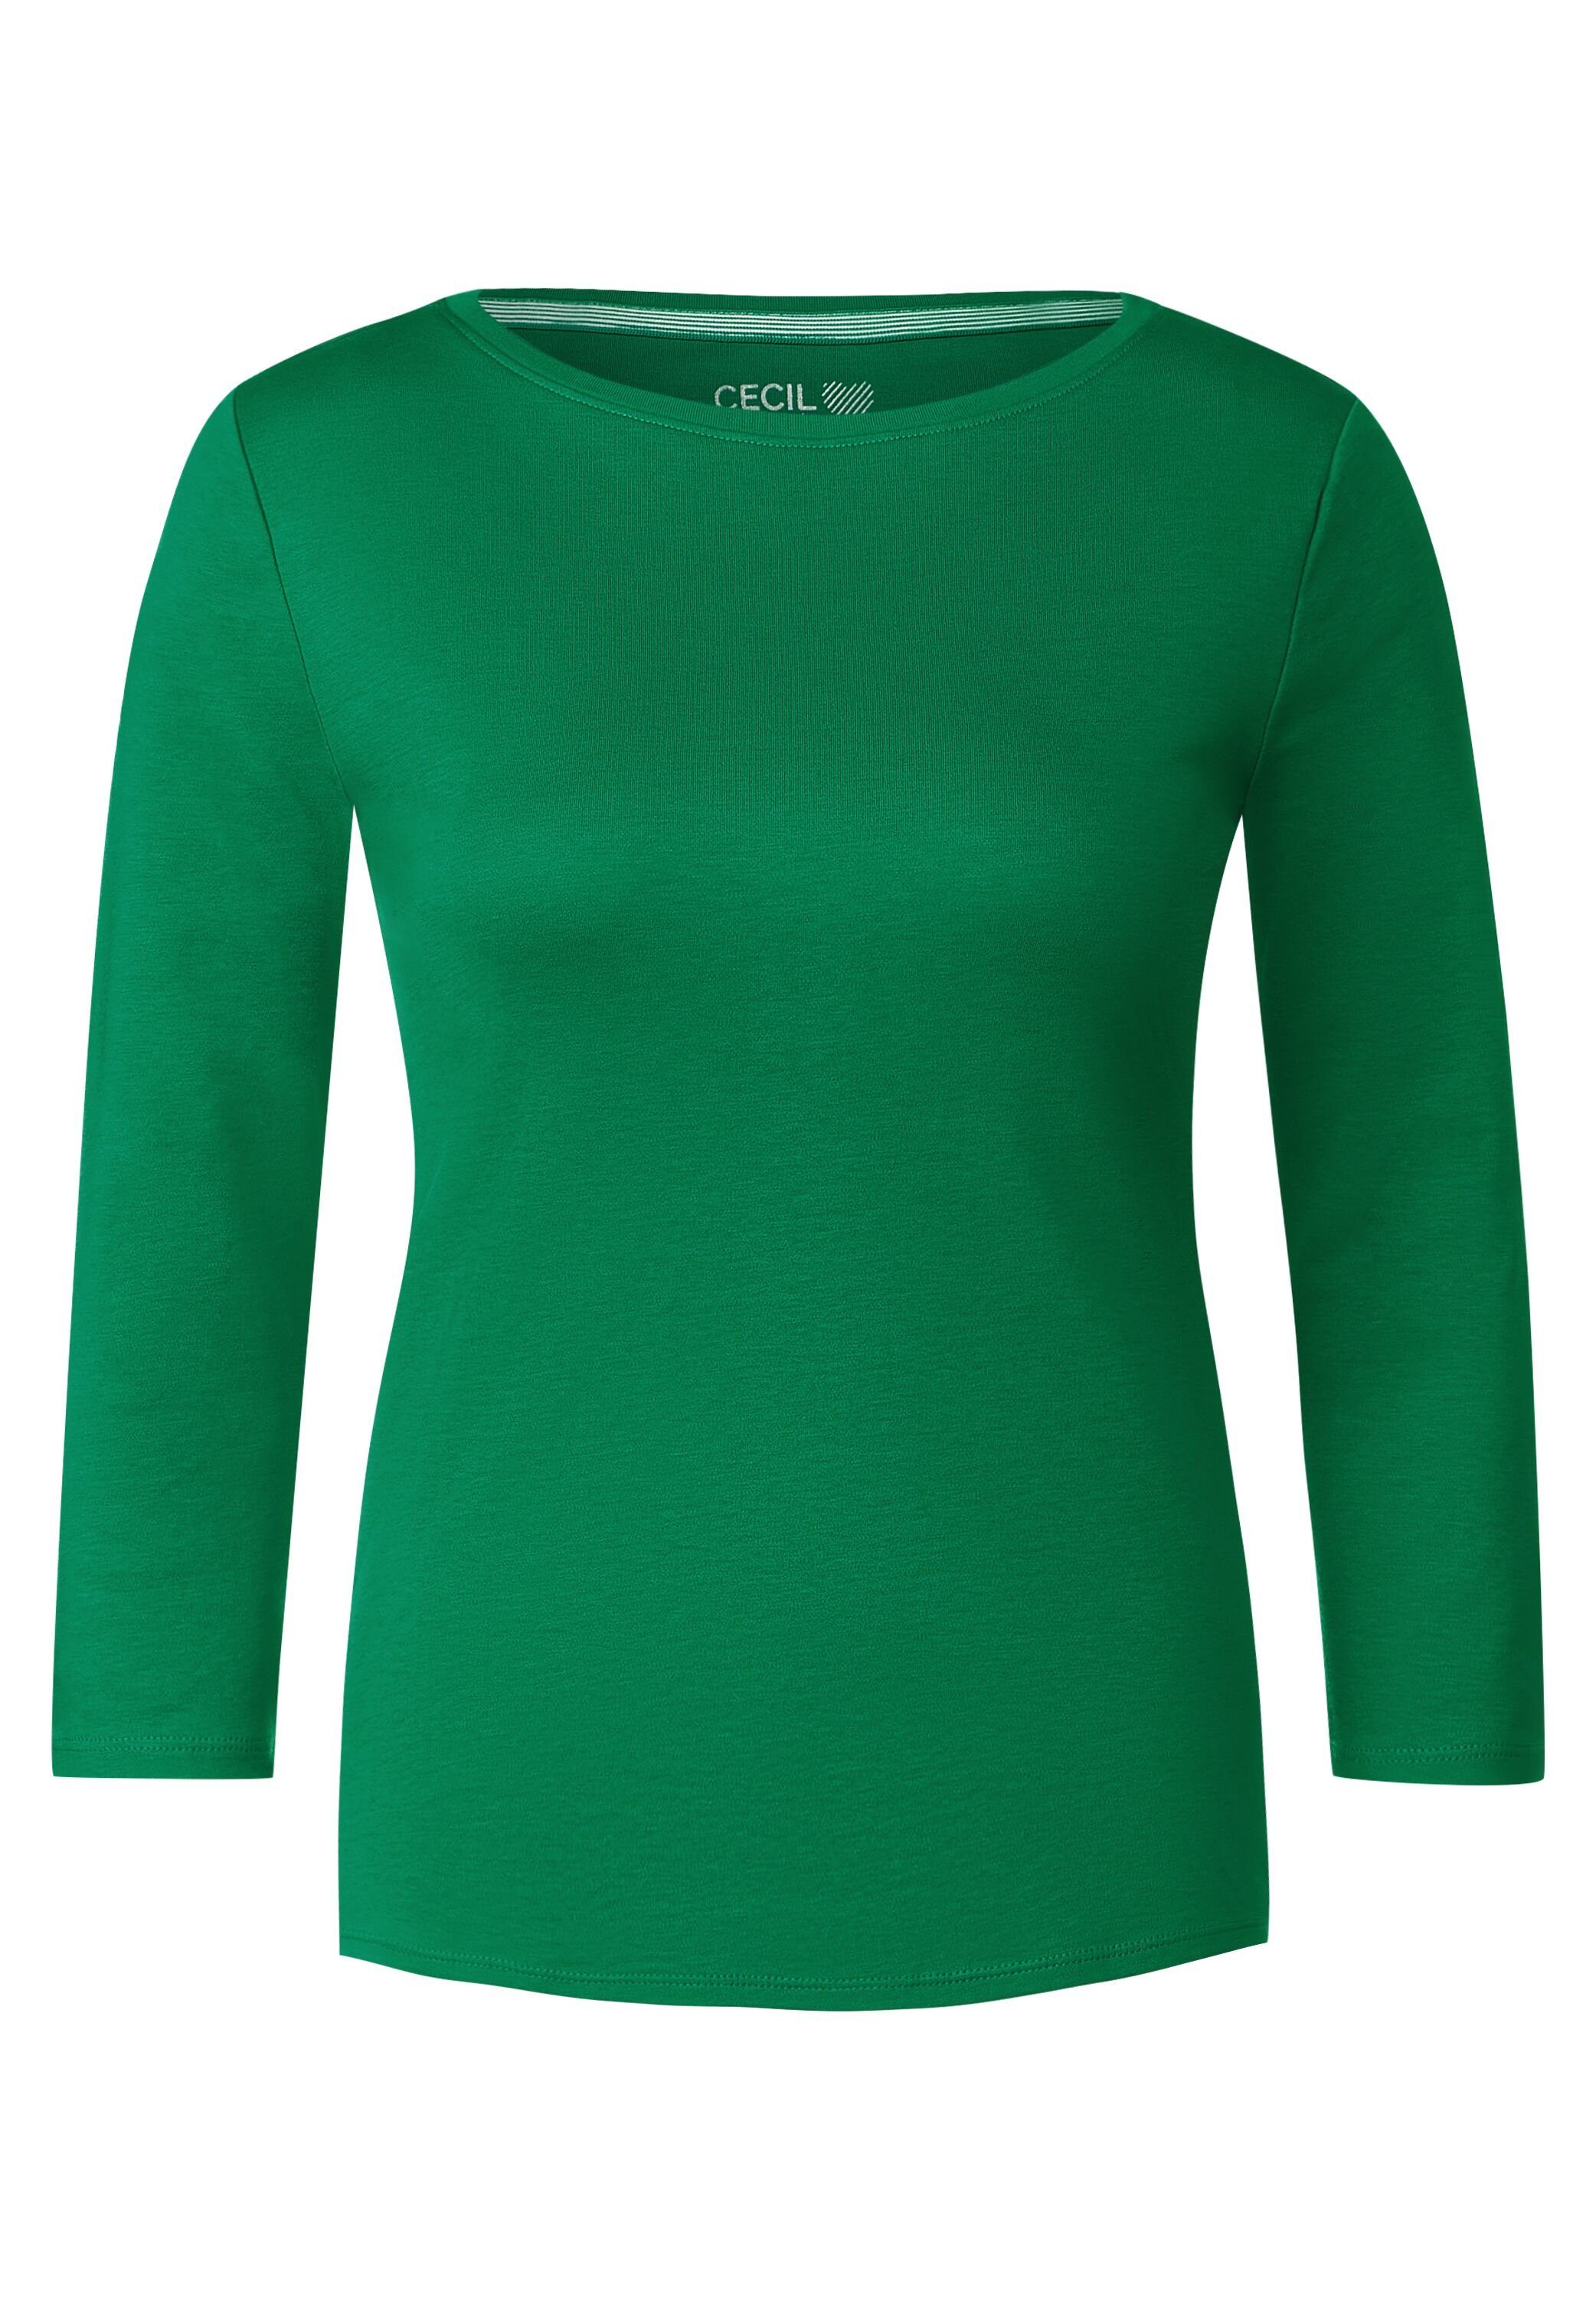 Cecil 3/4-Arm-Shirt Basic Unifarbe easy in in green Unifarbe Shirt